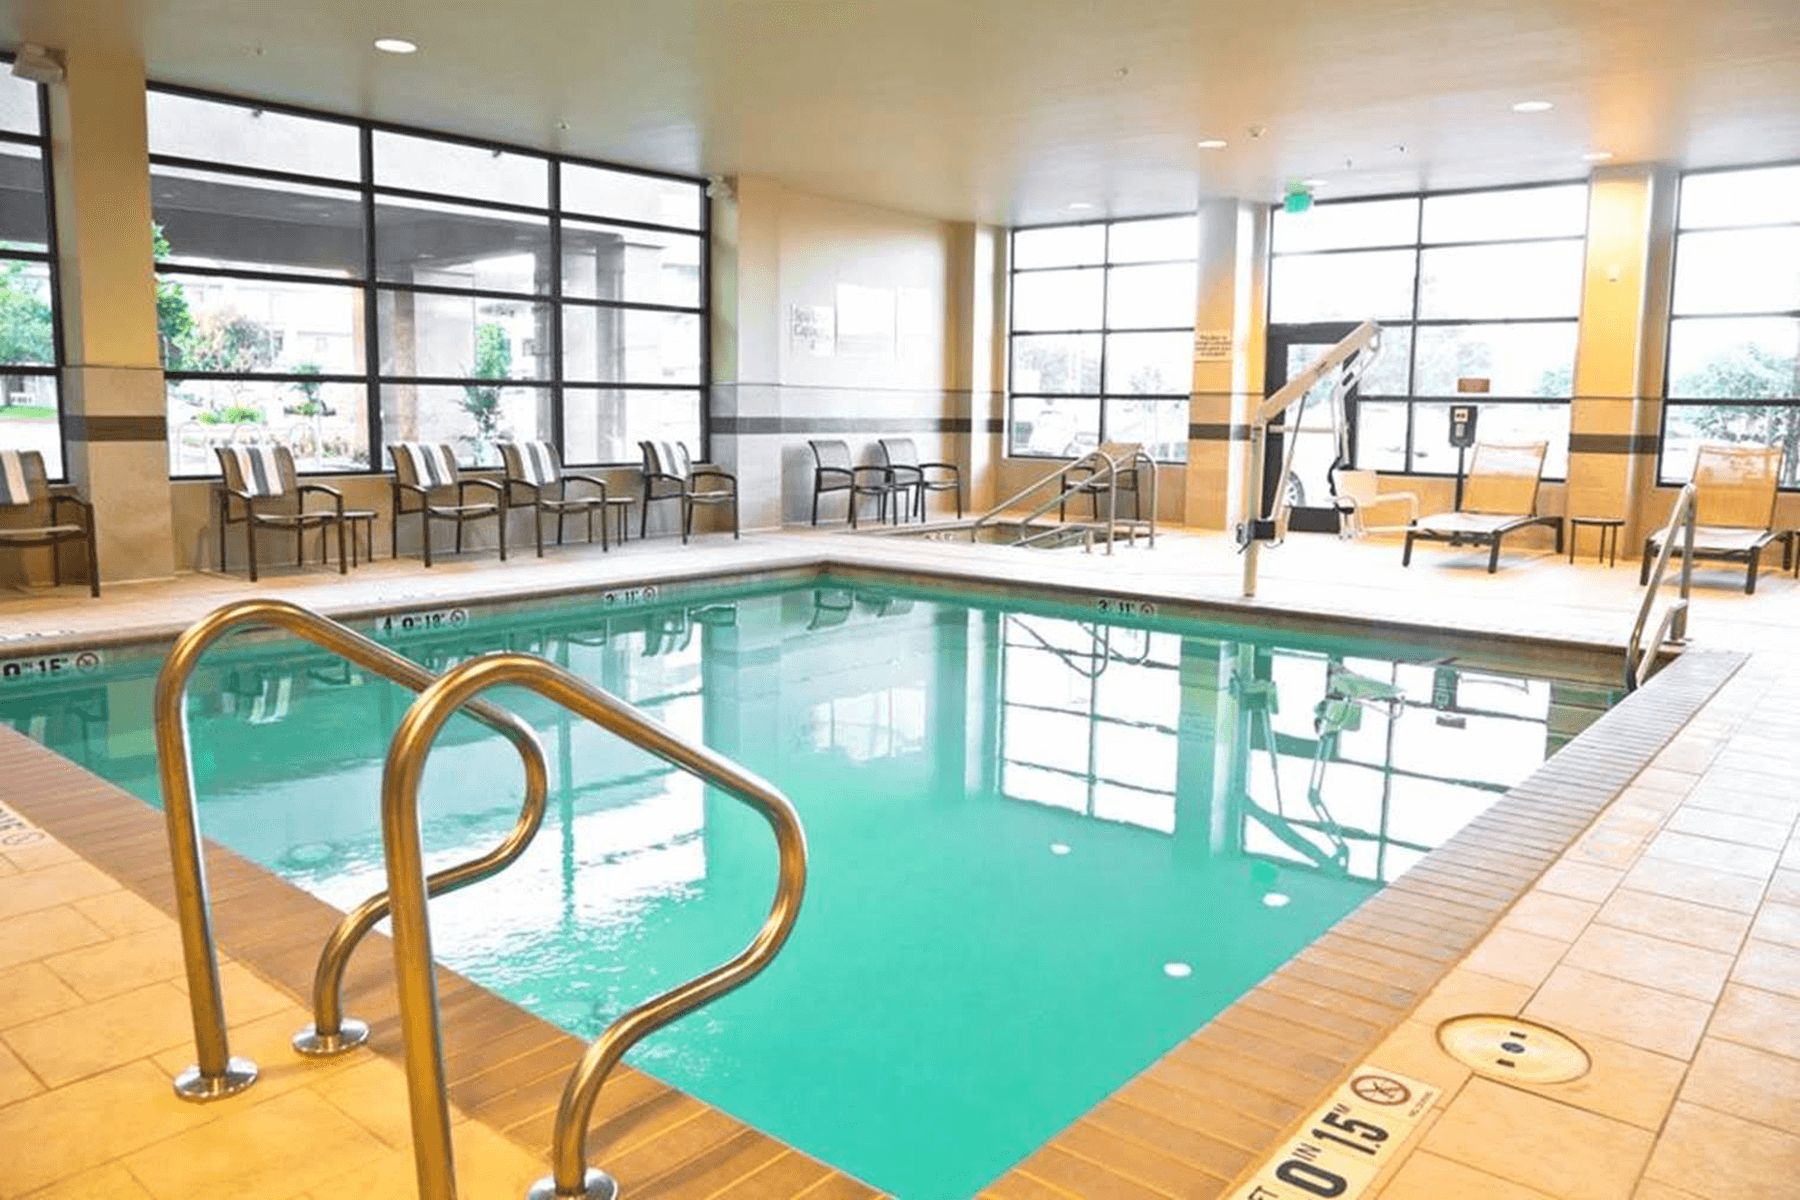  Hampton and Suites Salinas indoor swimming pool 